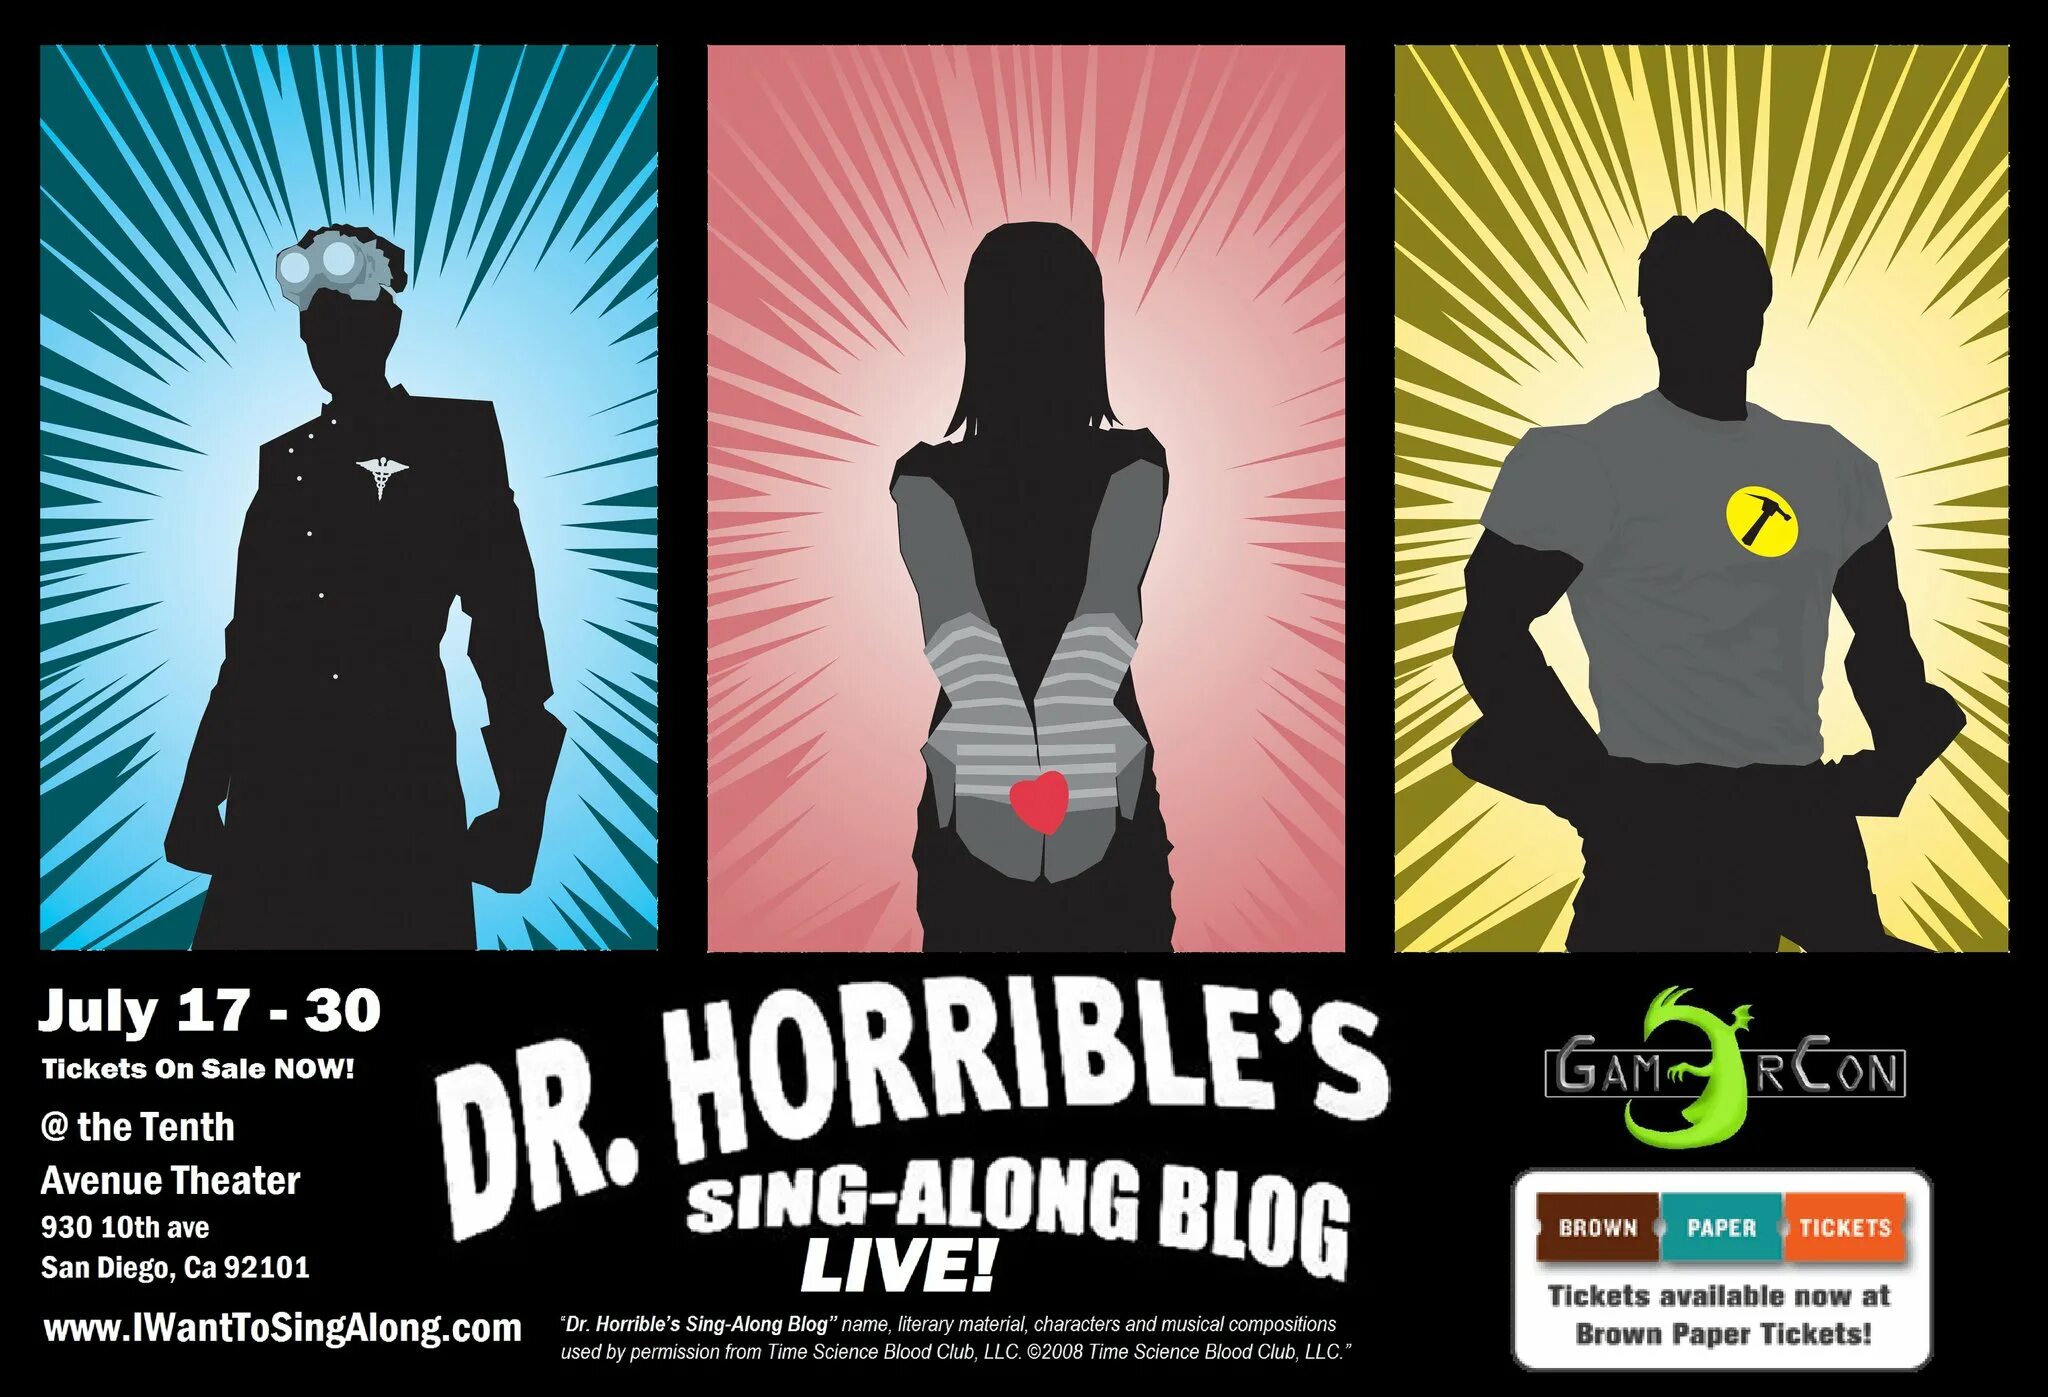 Hell s greatest dad sing. Doctor horrible's Sing-along blog. Музыкальный блог доктора ужасного.